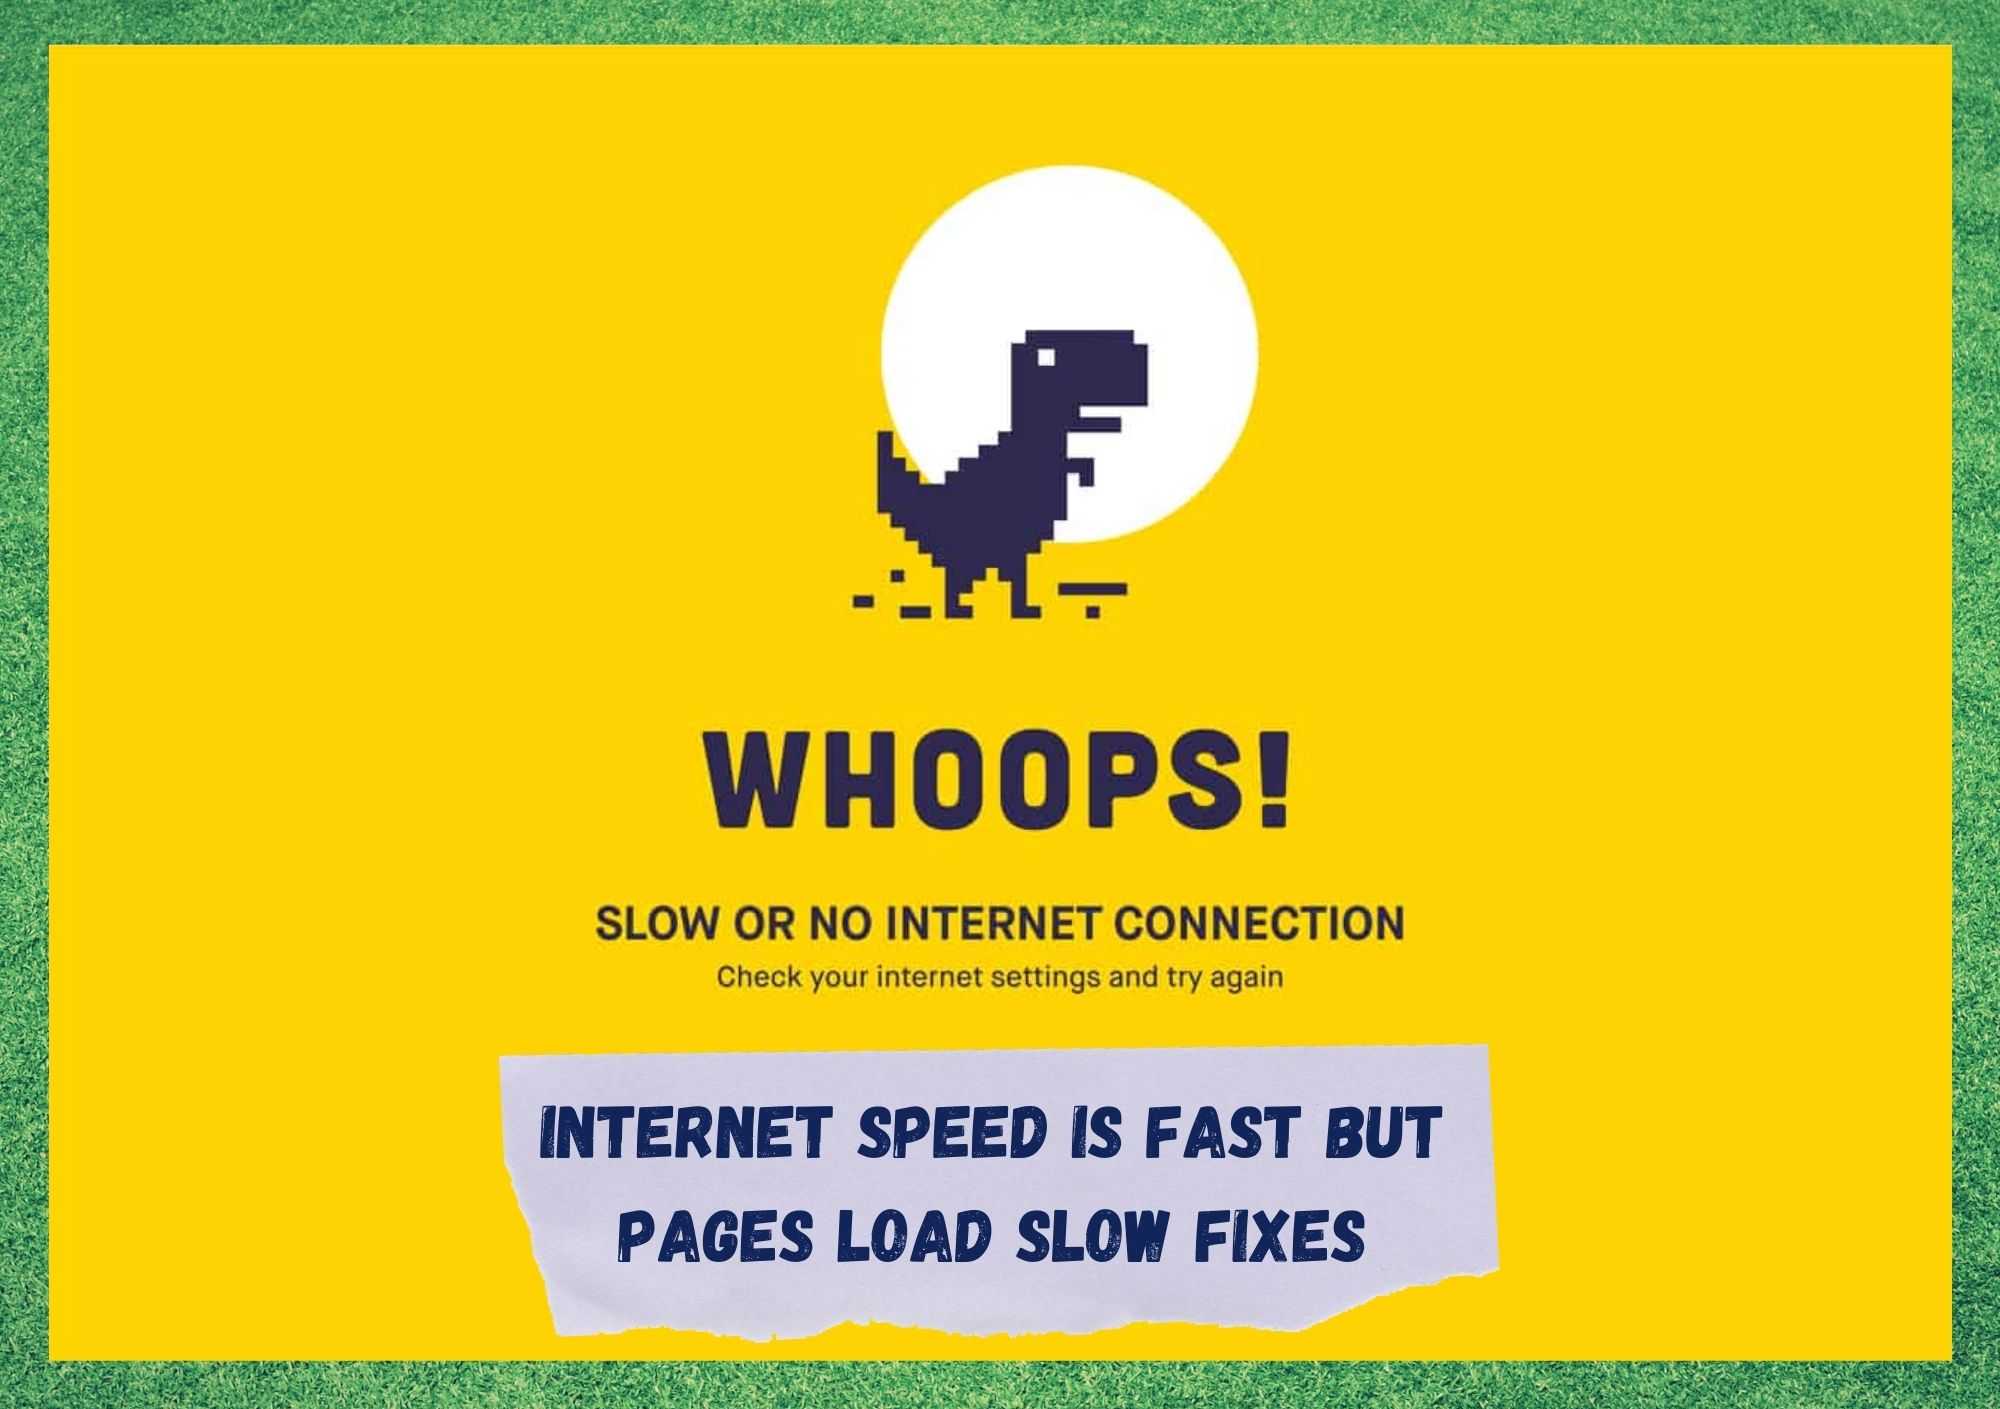 Kecepatan Internet Cepat Tetapi Halaman Dimuat Lambat Perbaiki